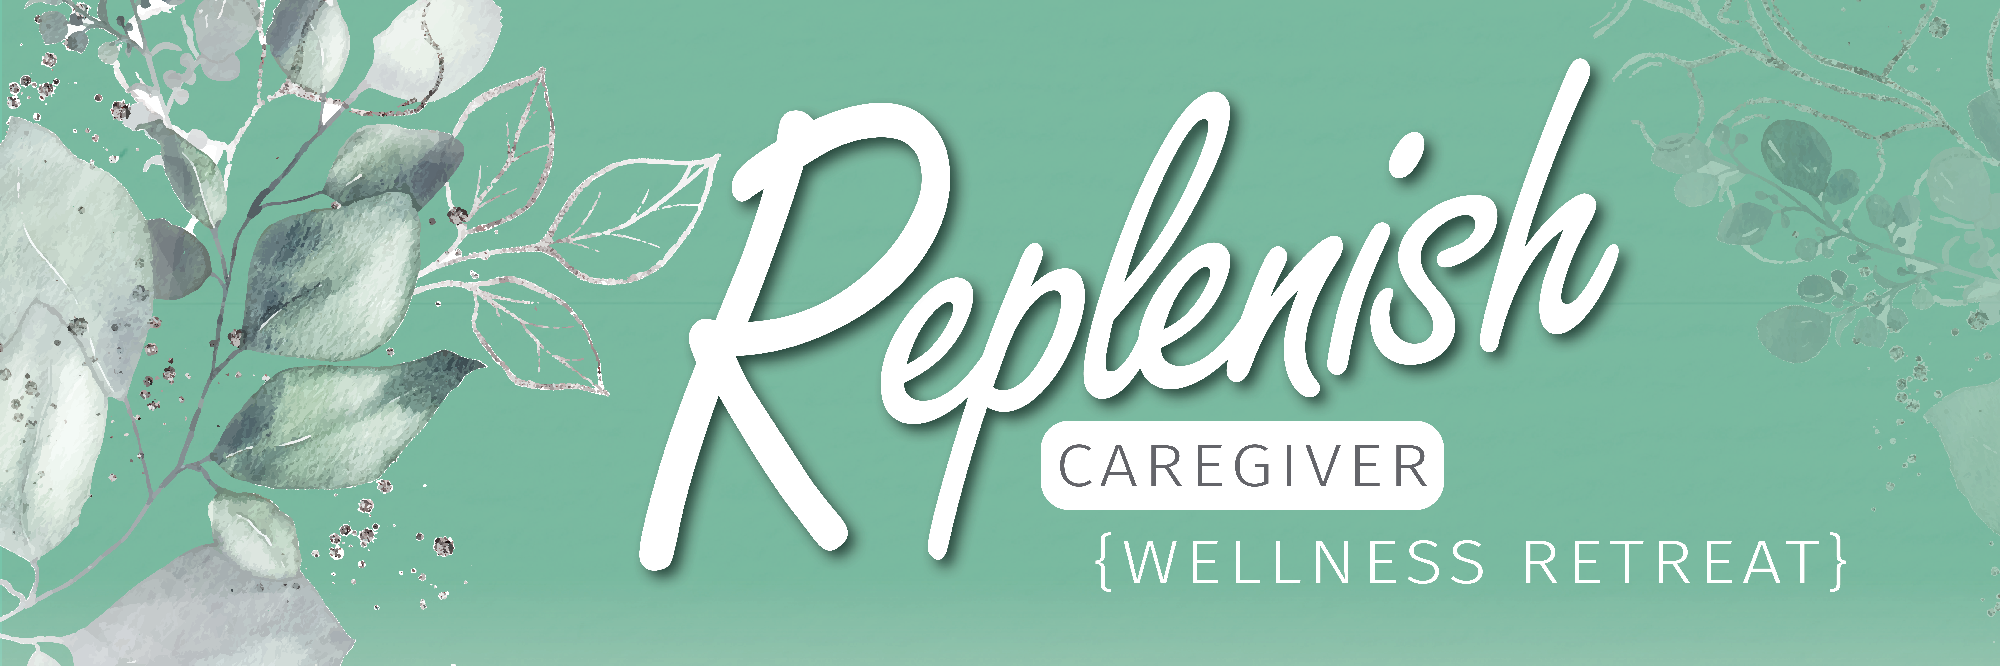 Cedarhurst Replenish Wellness Retreat EmailHeader_r1.v1-1